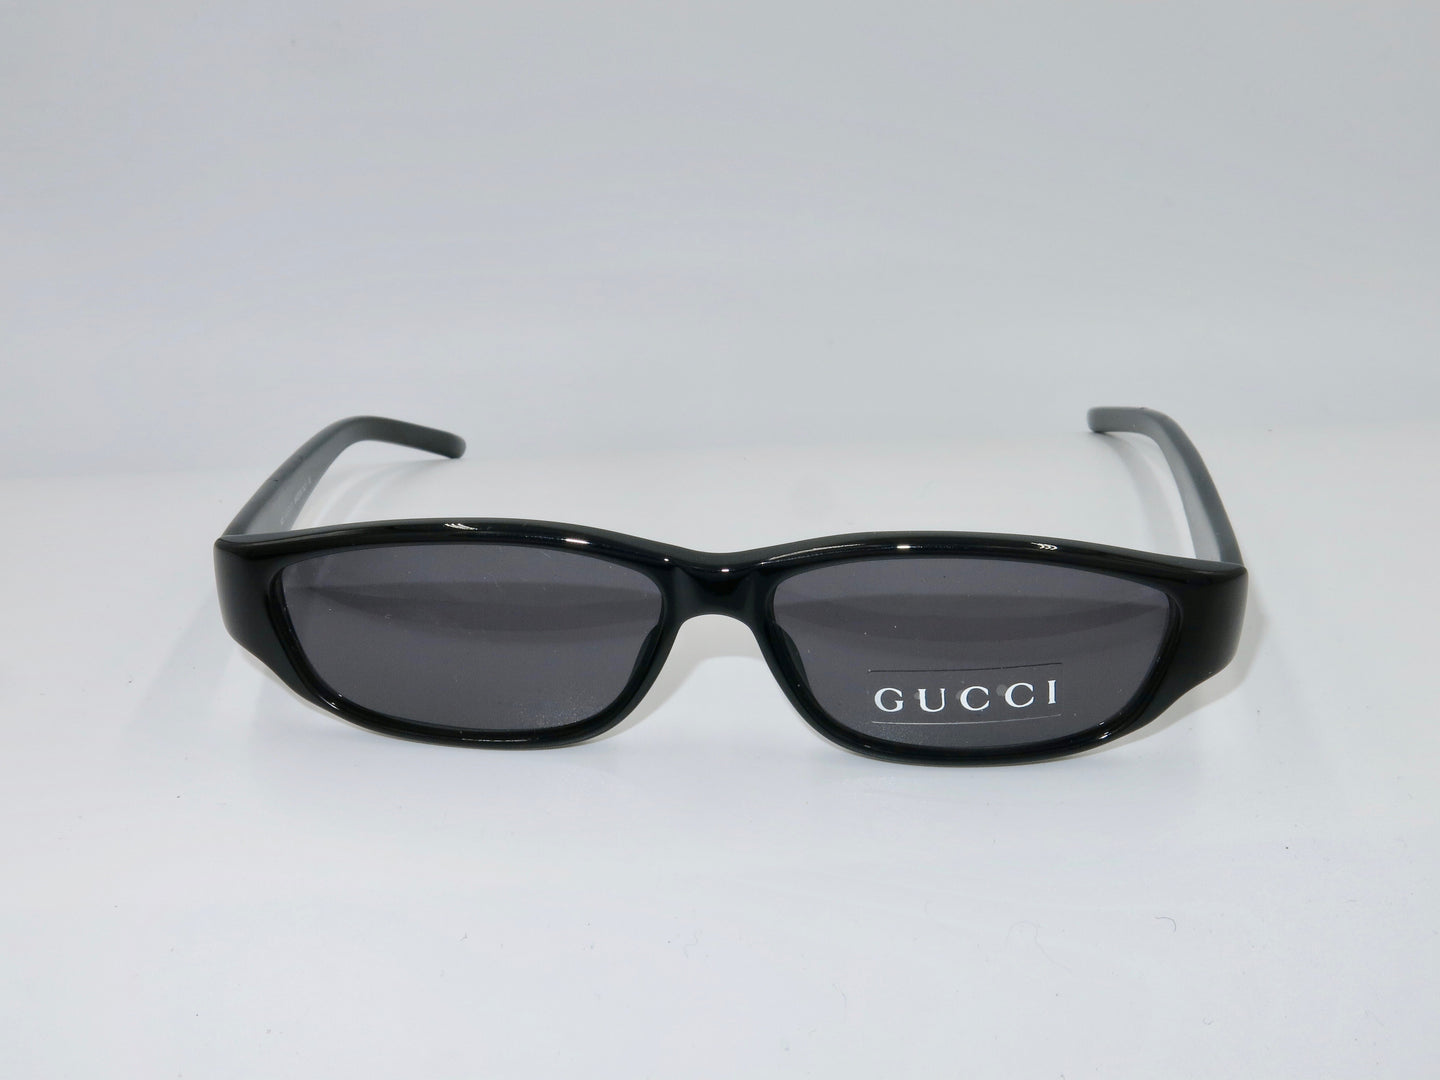 GUCCI Sunglasses GG 1418 - Black | Sunglasses by Gucci | Friedman & Sons